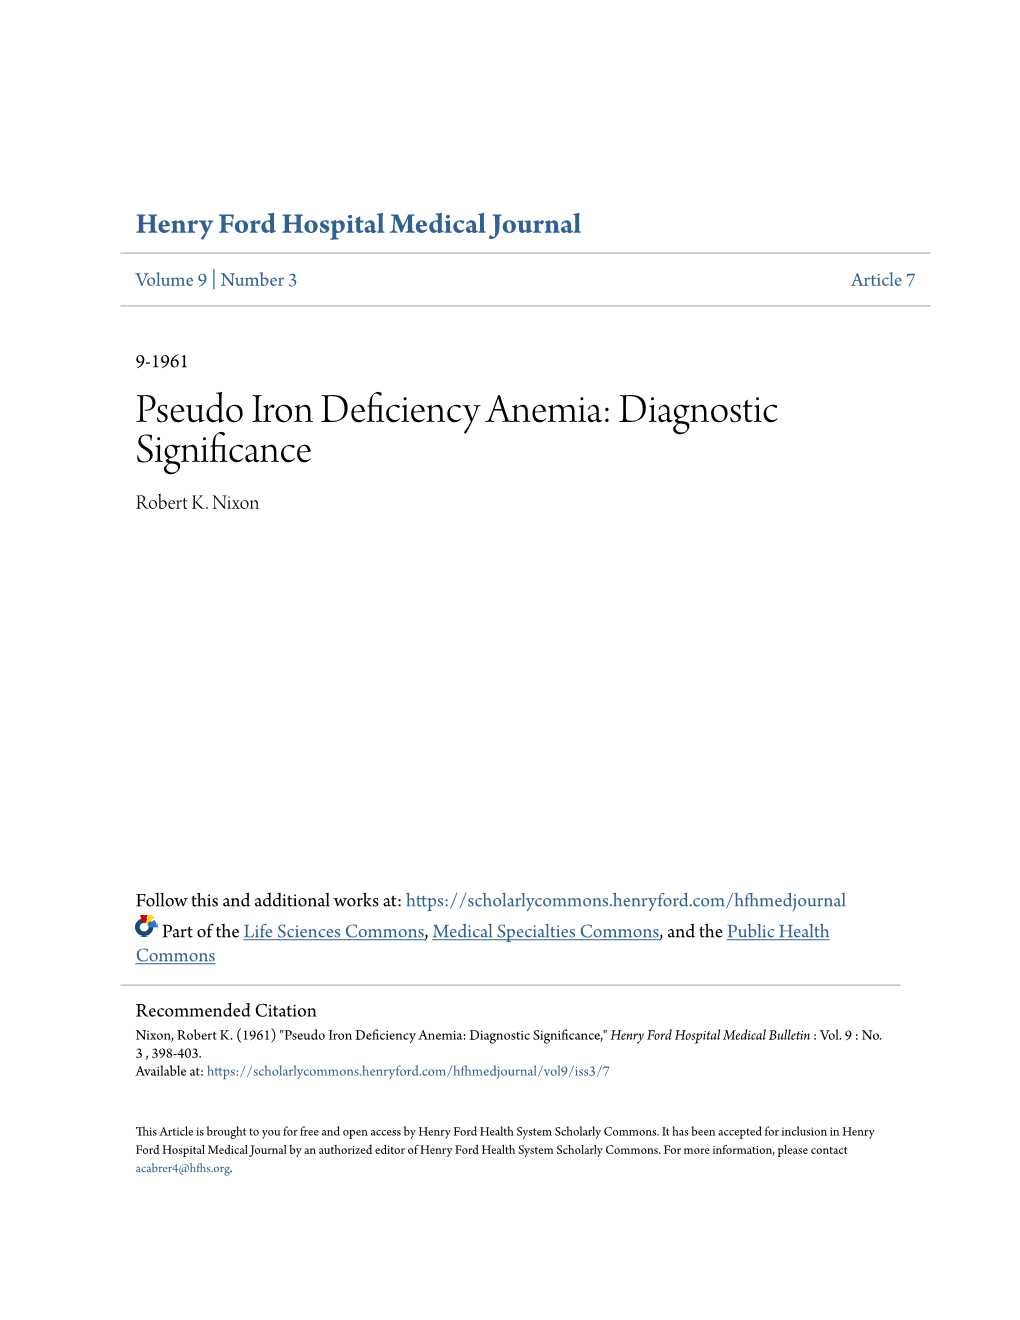 Pseudo Iron Deficiency Anemia: Diagnostic Significance Robert K